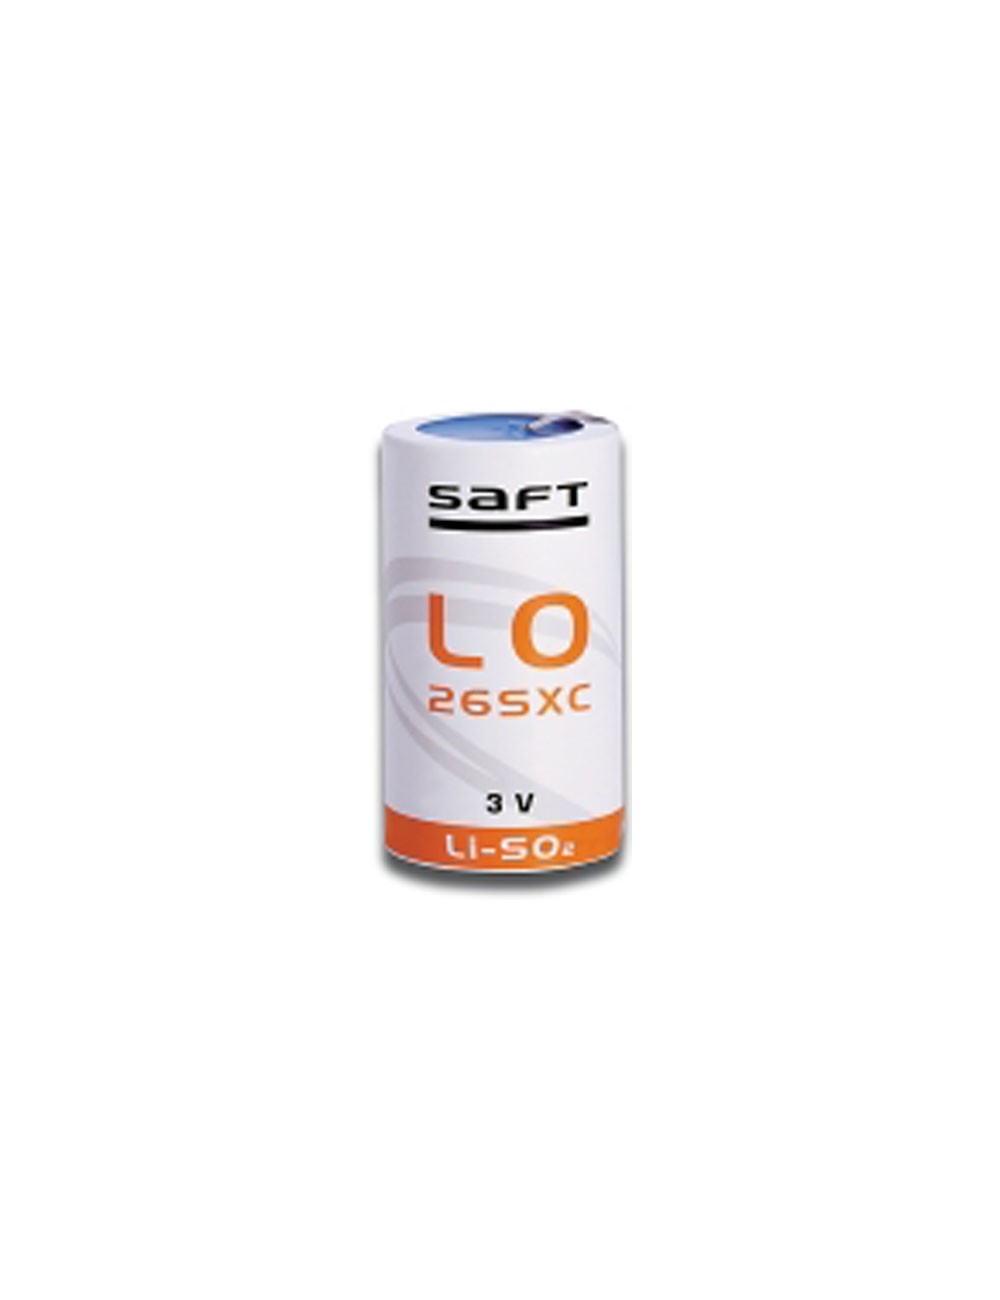 Lithium battery 3V 9,2Ah High Drain LO 26 SXC